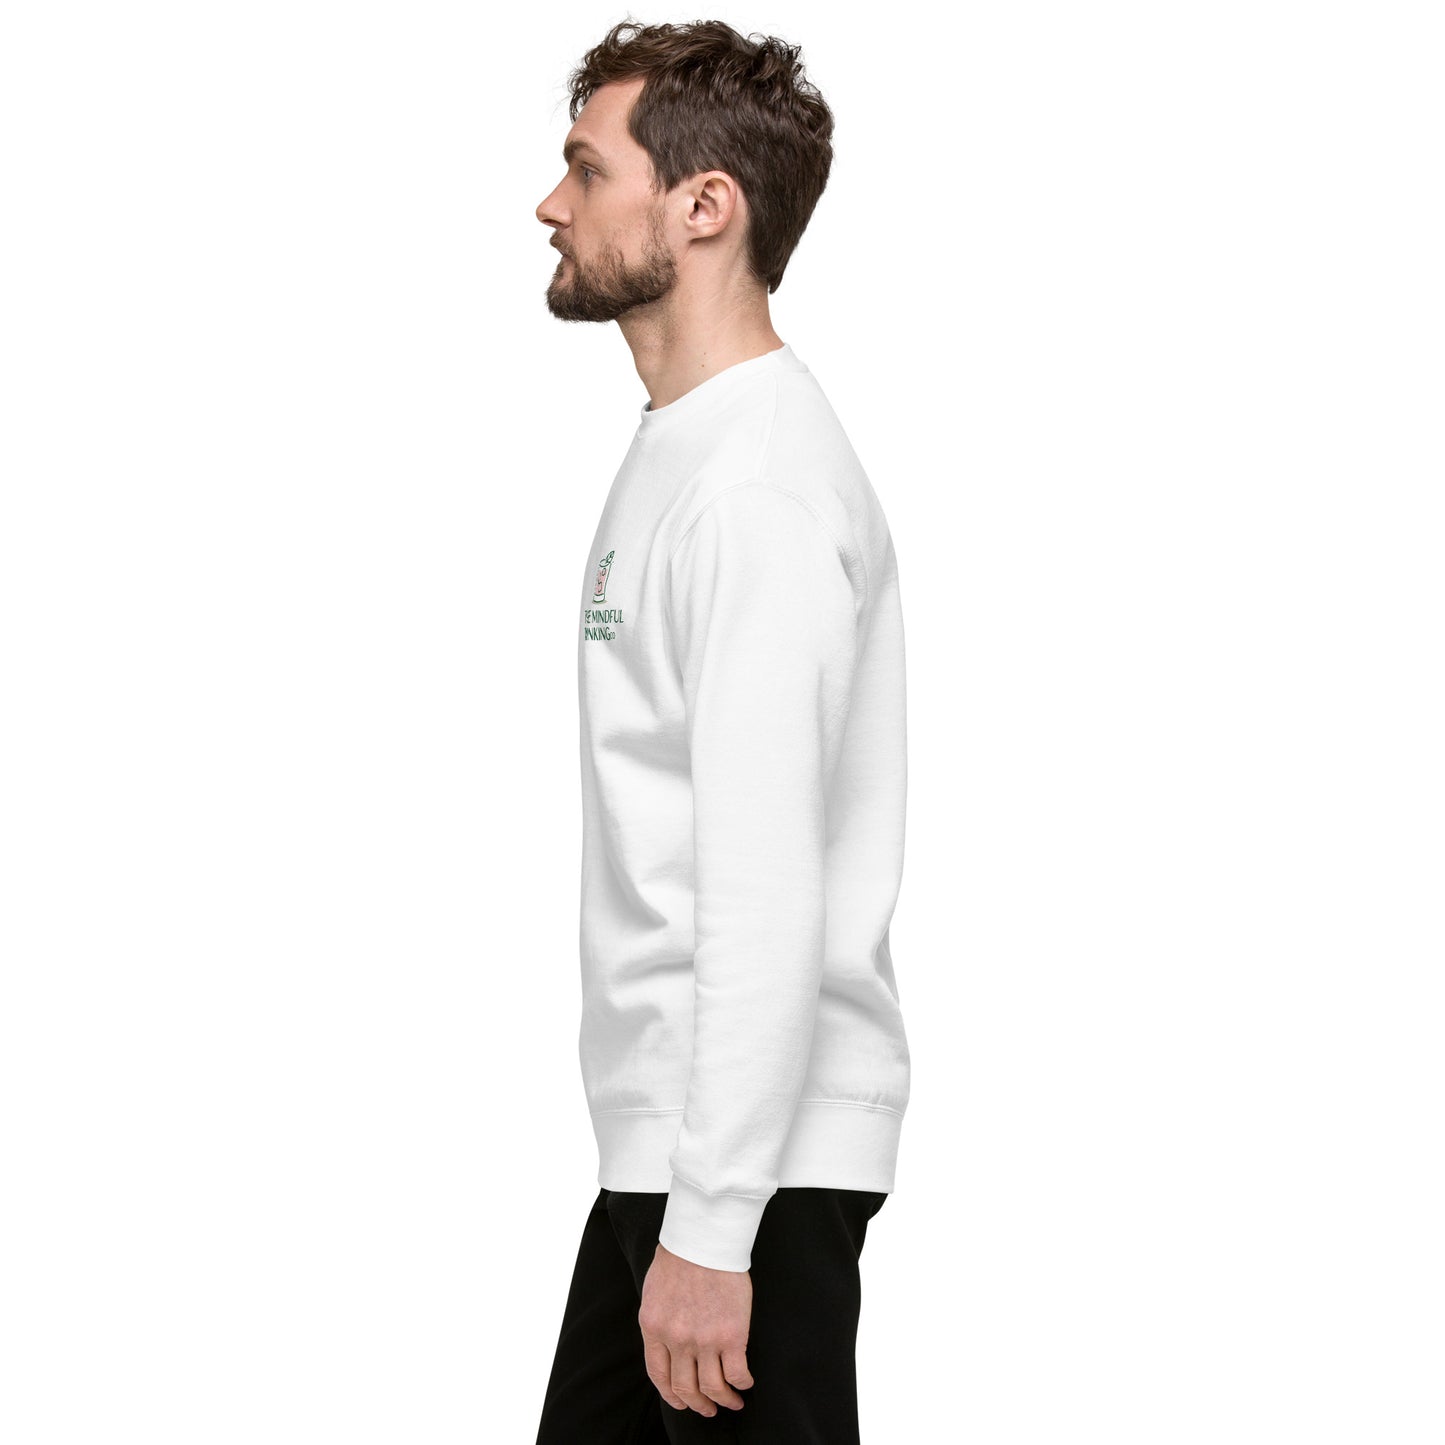 The Mindful Drinking Co.'s Unisex Premium Sweatshirt